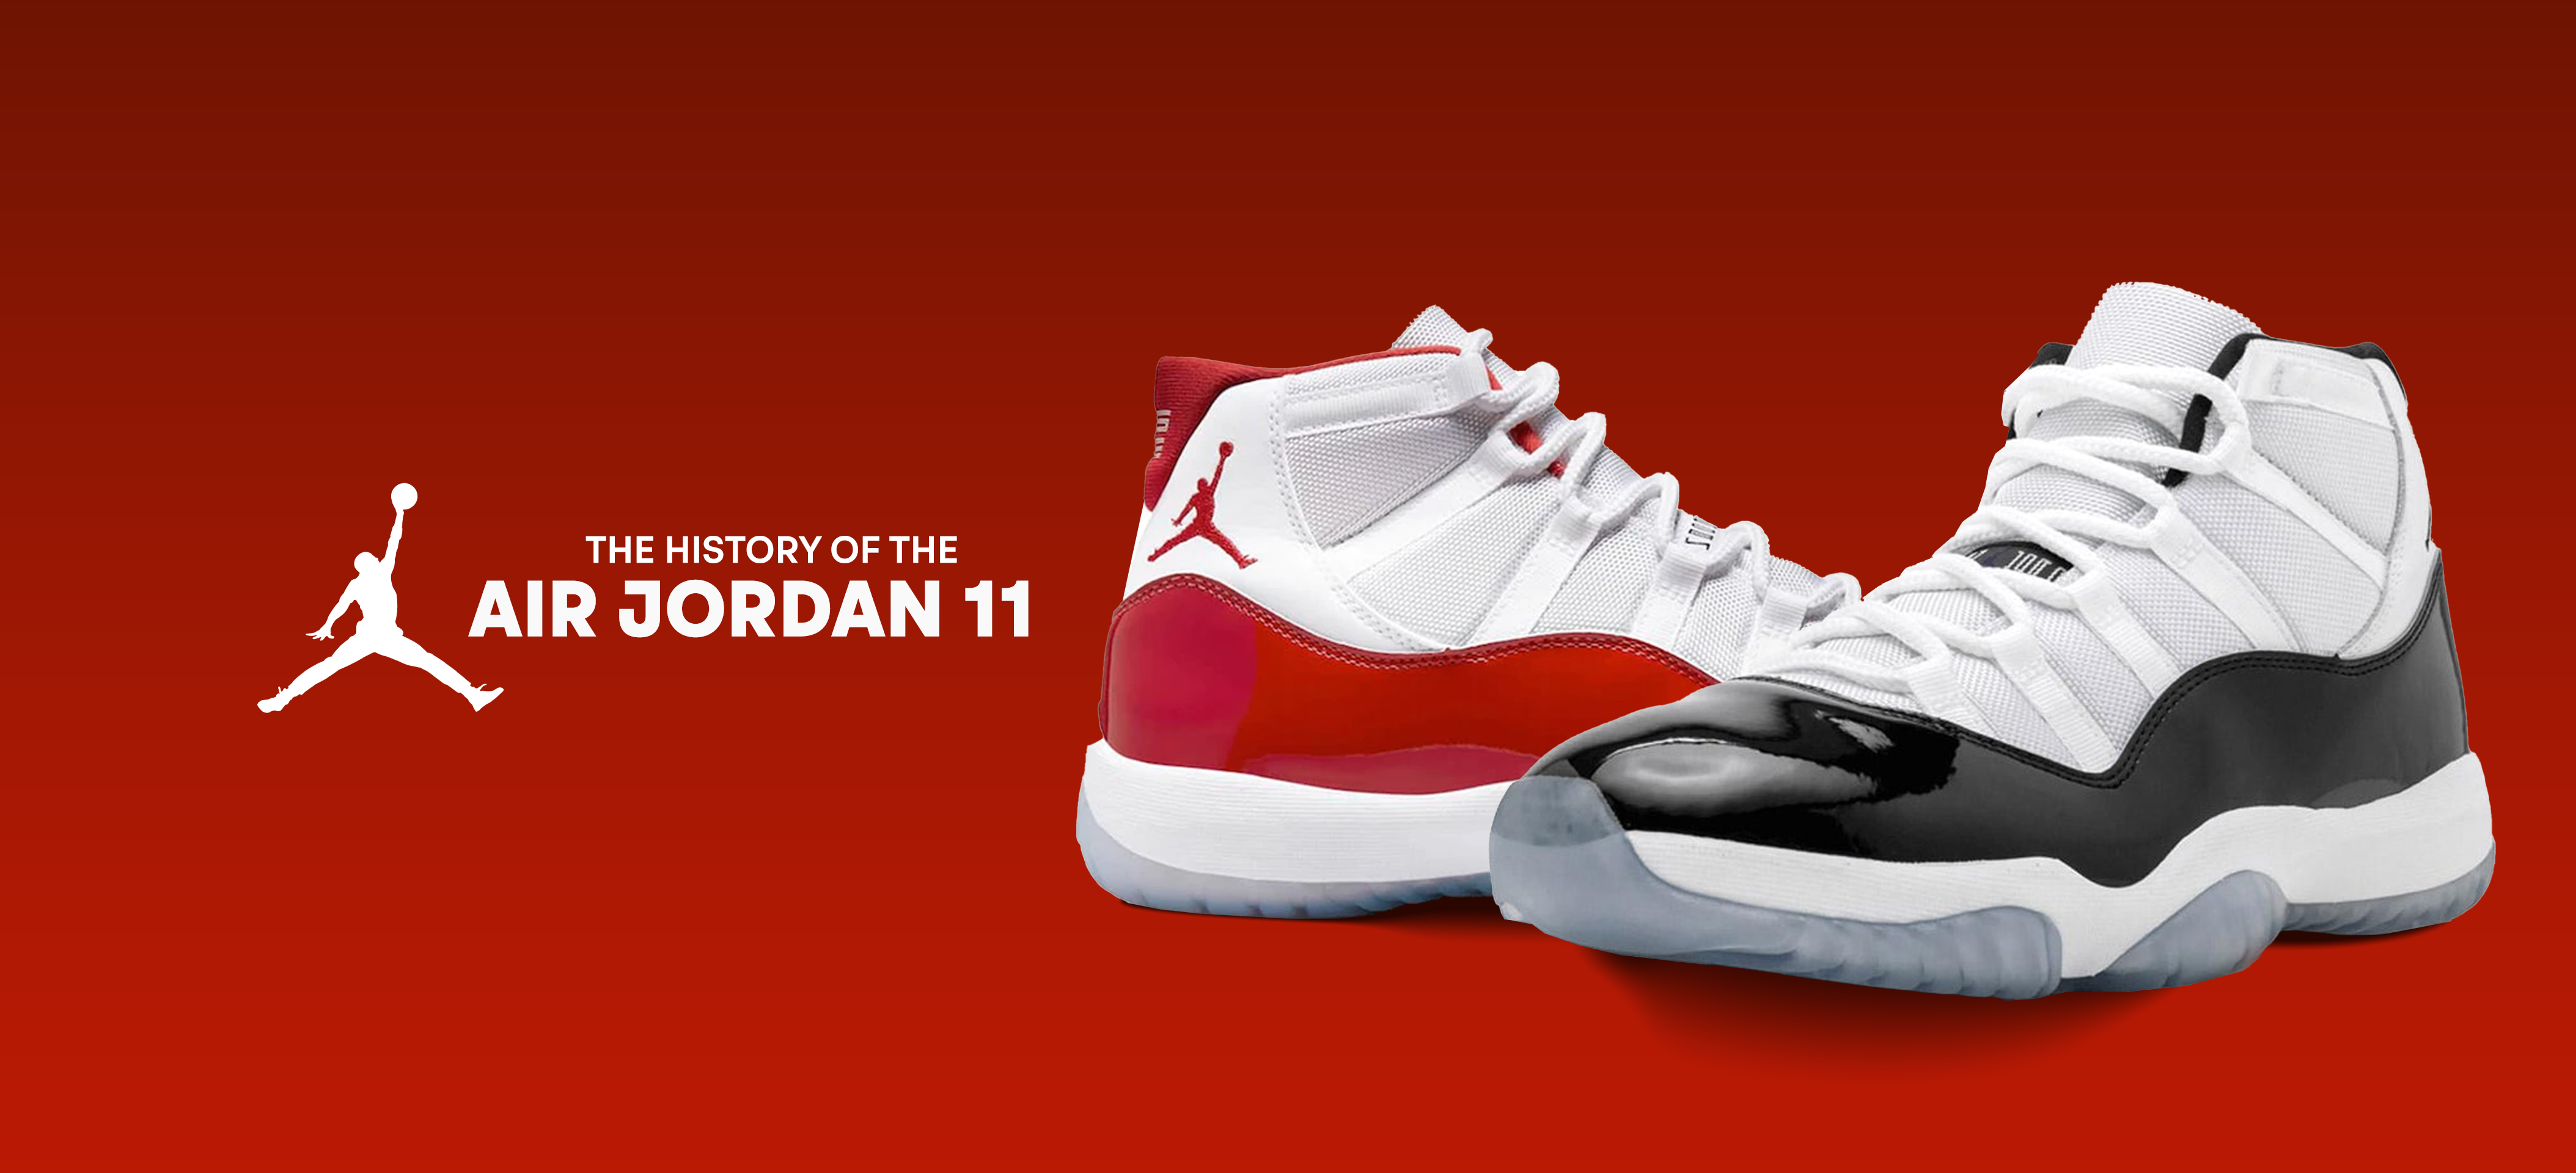 J23 iPhone App on Twitter Just Dropped Air Jordan 11 Cool Grey gt  httpstcoknvf3XpzSg httpstco05TAUPJT36  Twitter